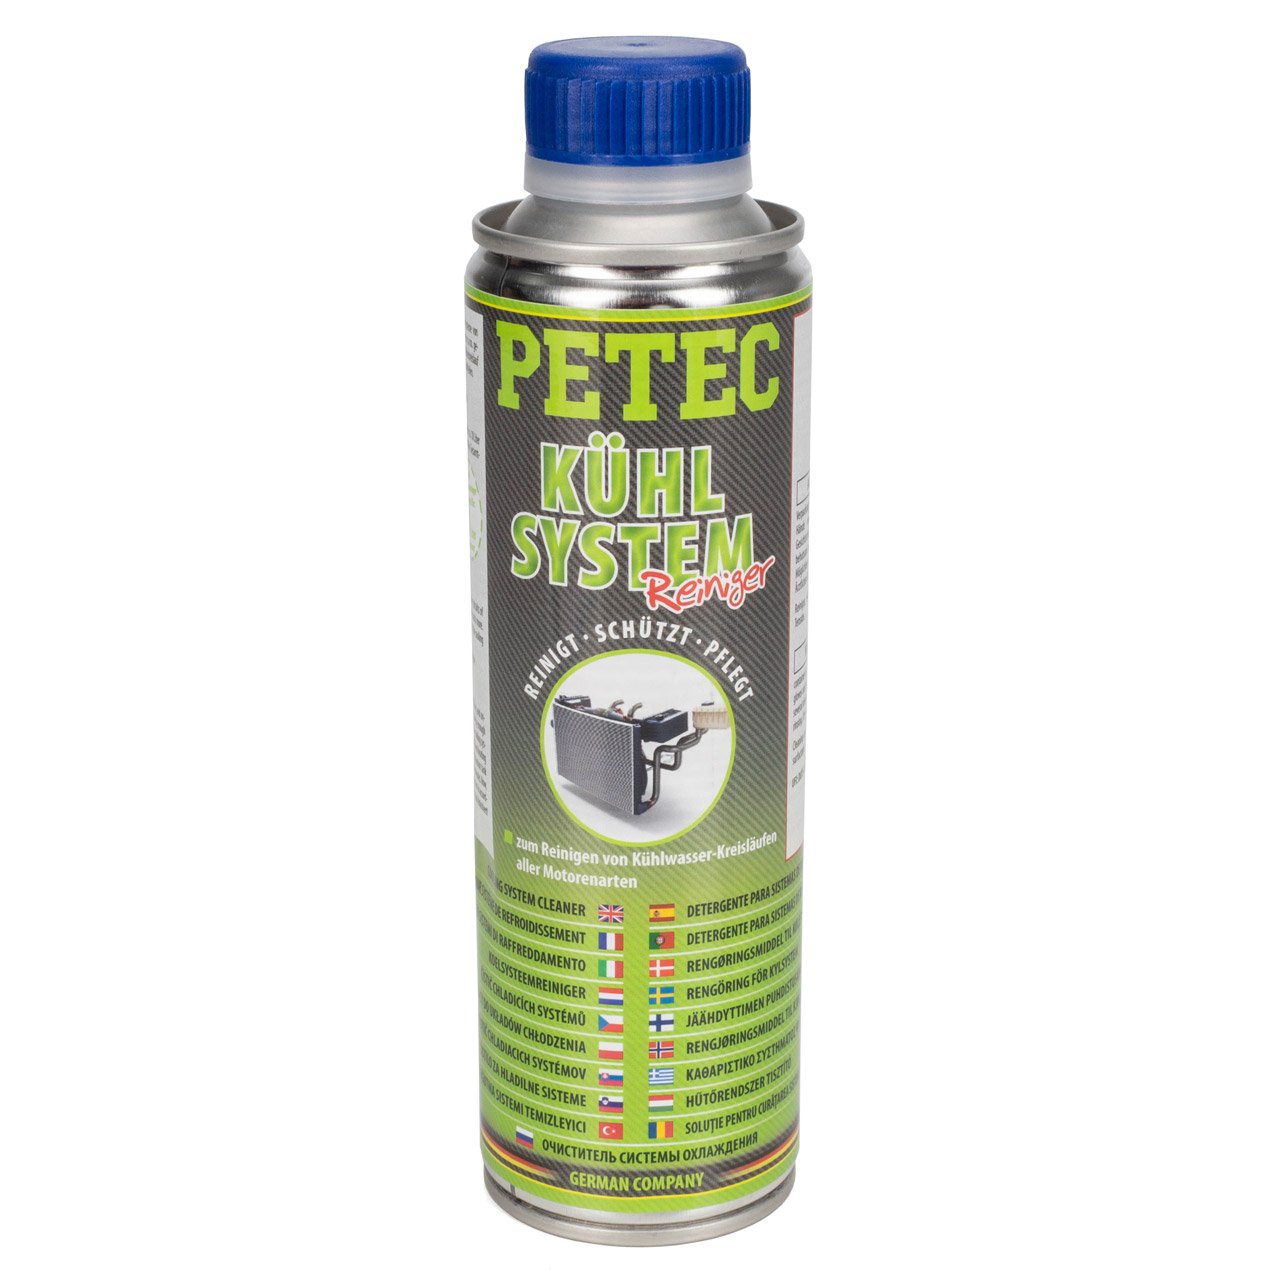 PETEC 80450 Kühlsystemreiniger Kühlerreiniger Motorkühlung Kühler Reiniger Pflege 250ml